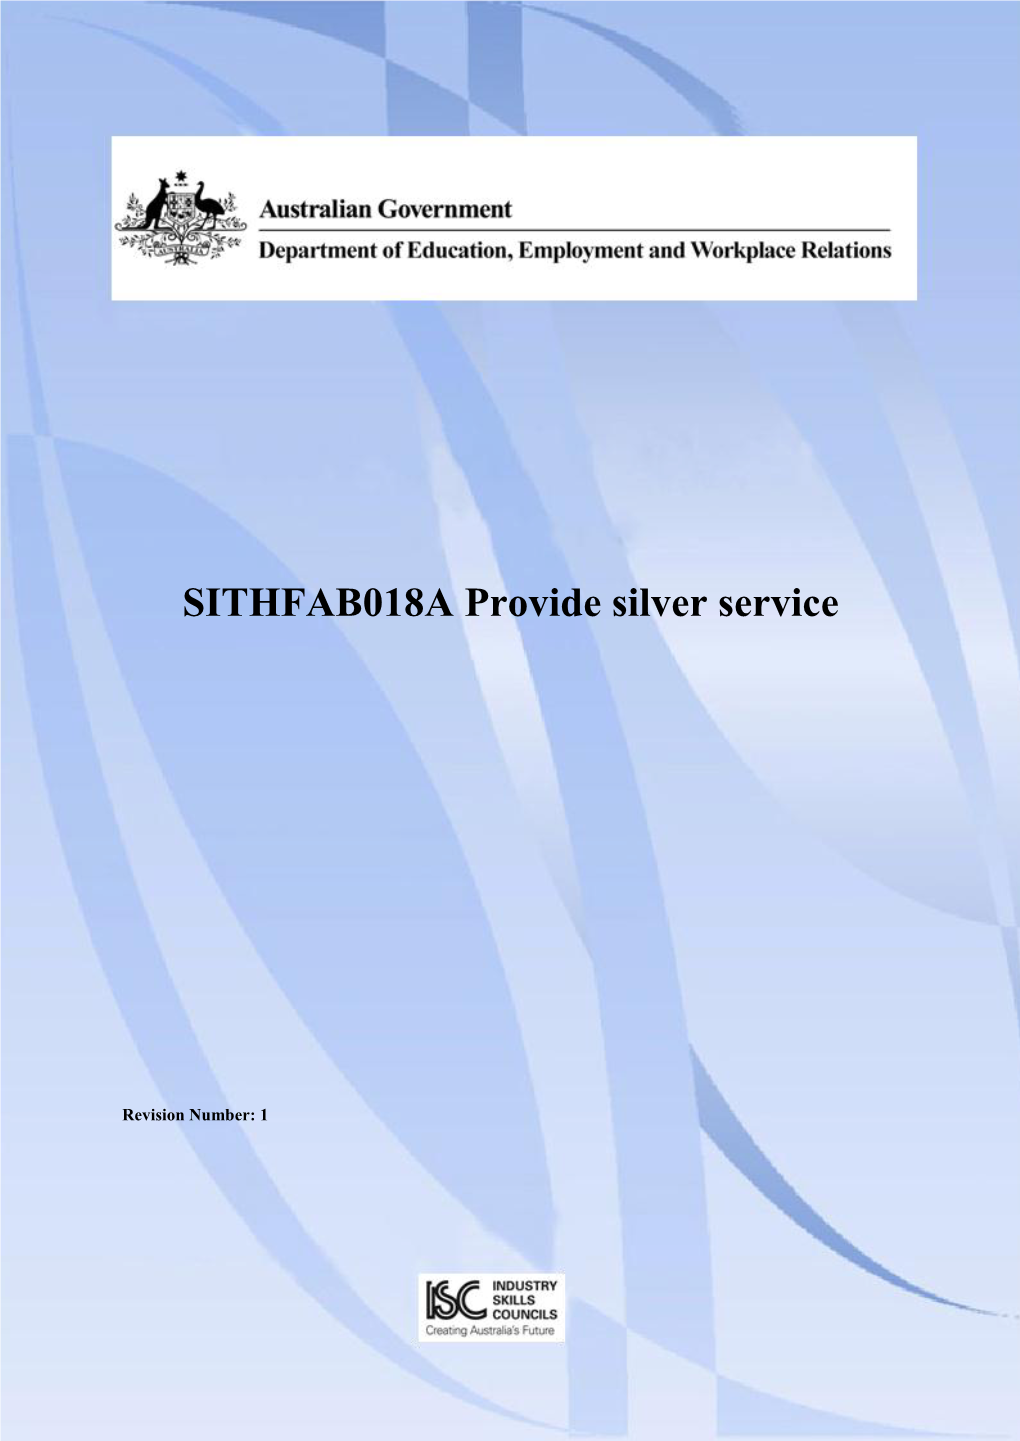 SITHFAB018A Provide Silver Service